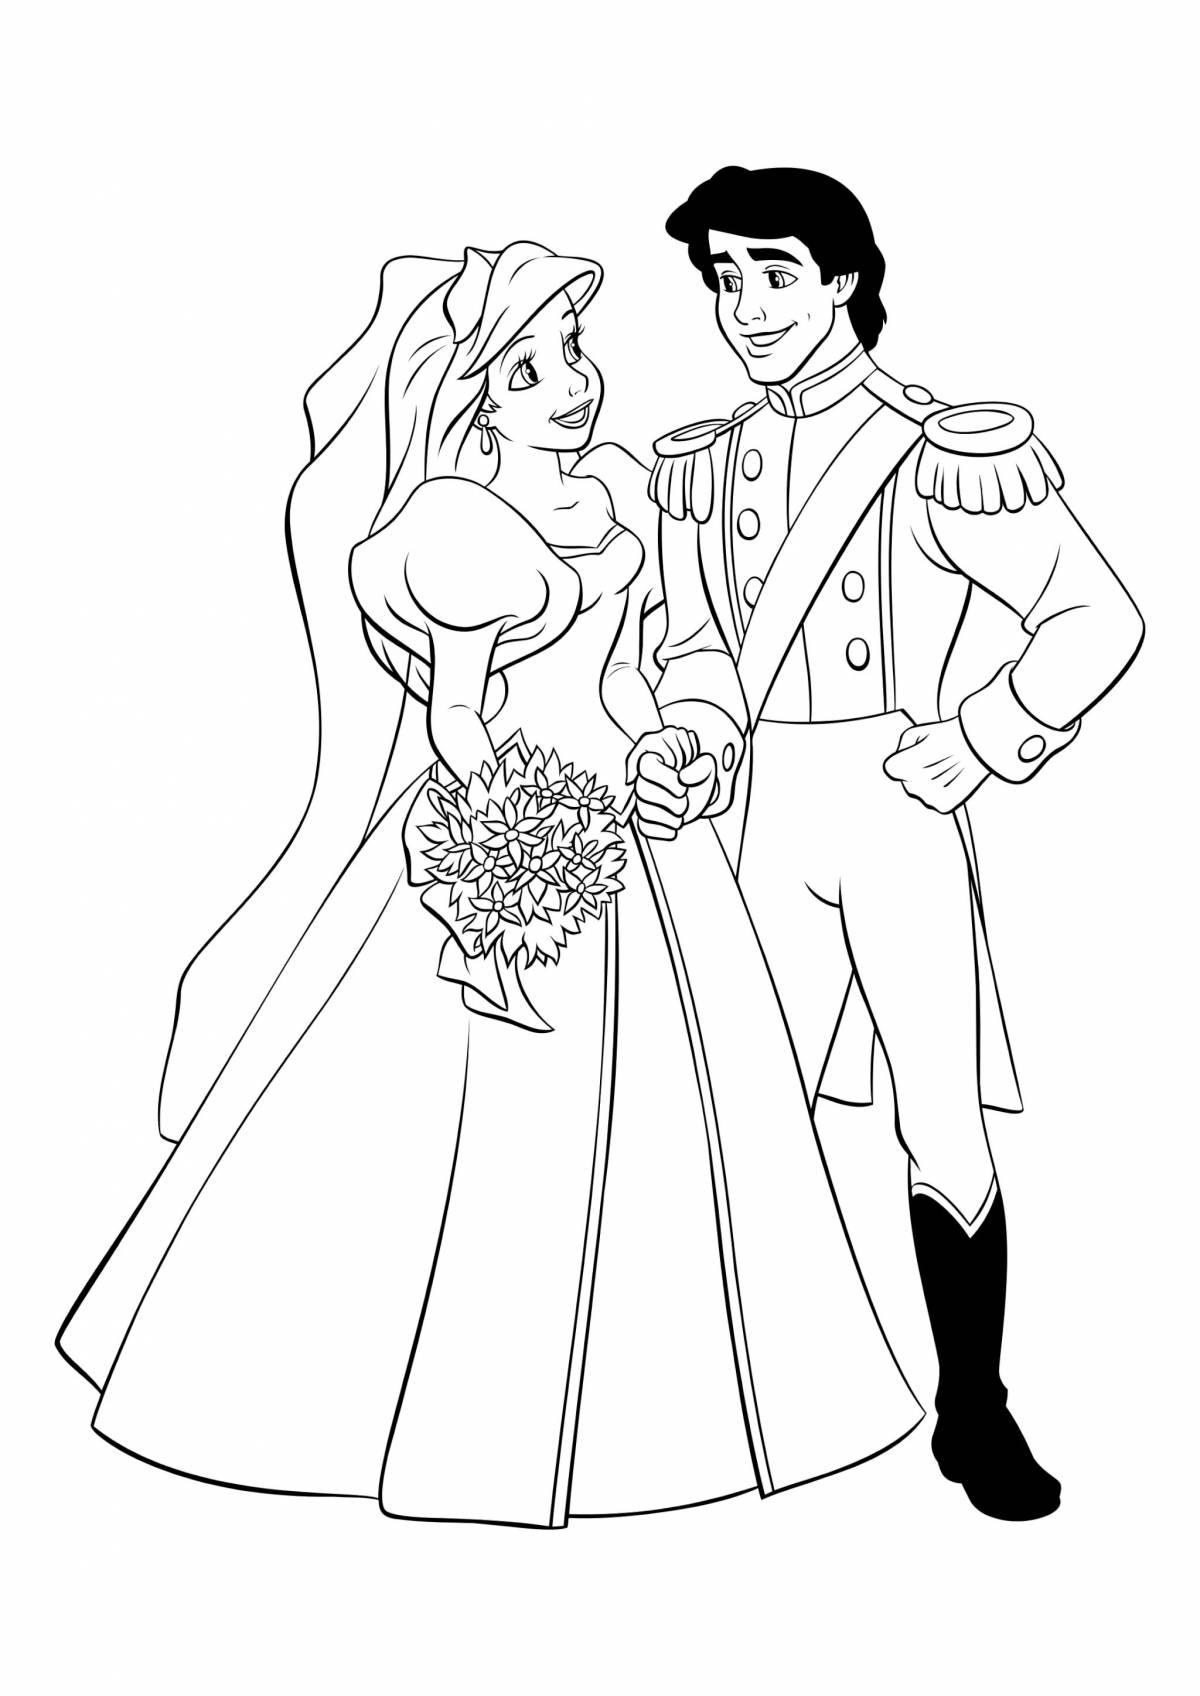 Splendor coloring princess and prince for kids